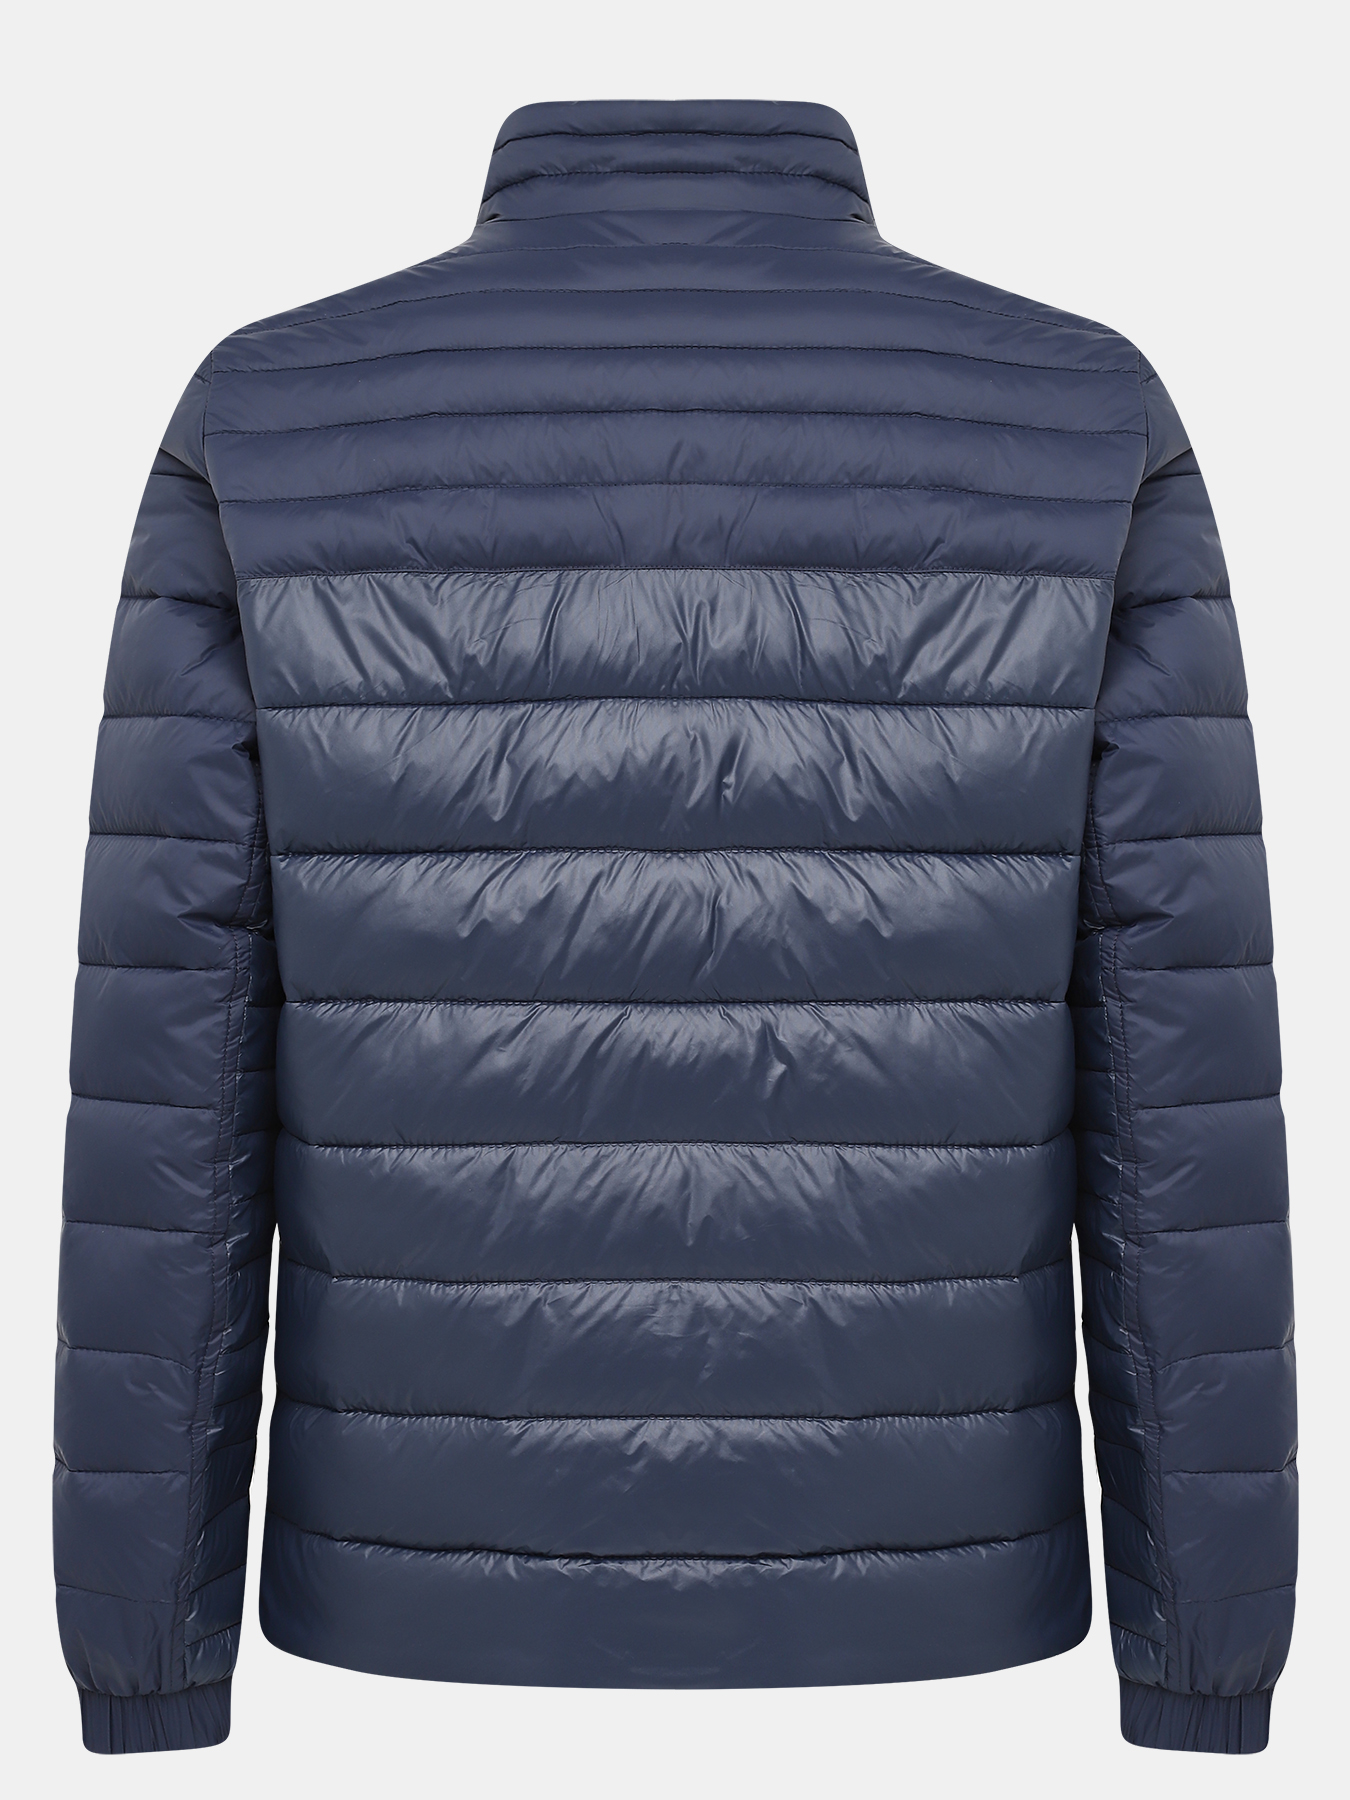 Куртка Oden BOSS 420447-025, цвет синий, размер 48 - фото 5